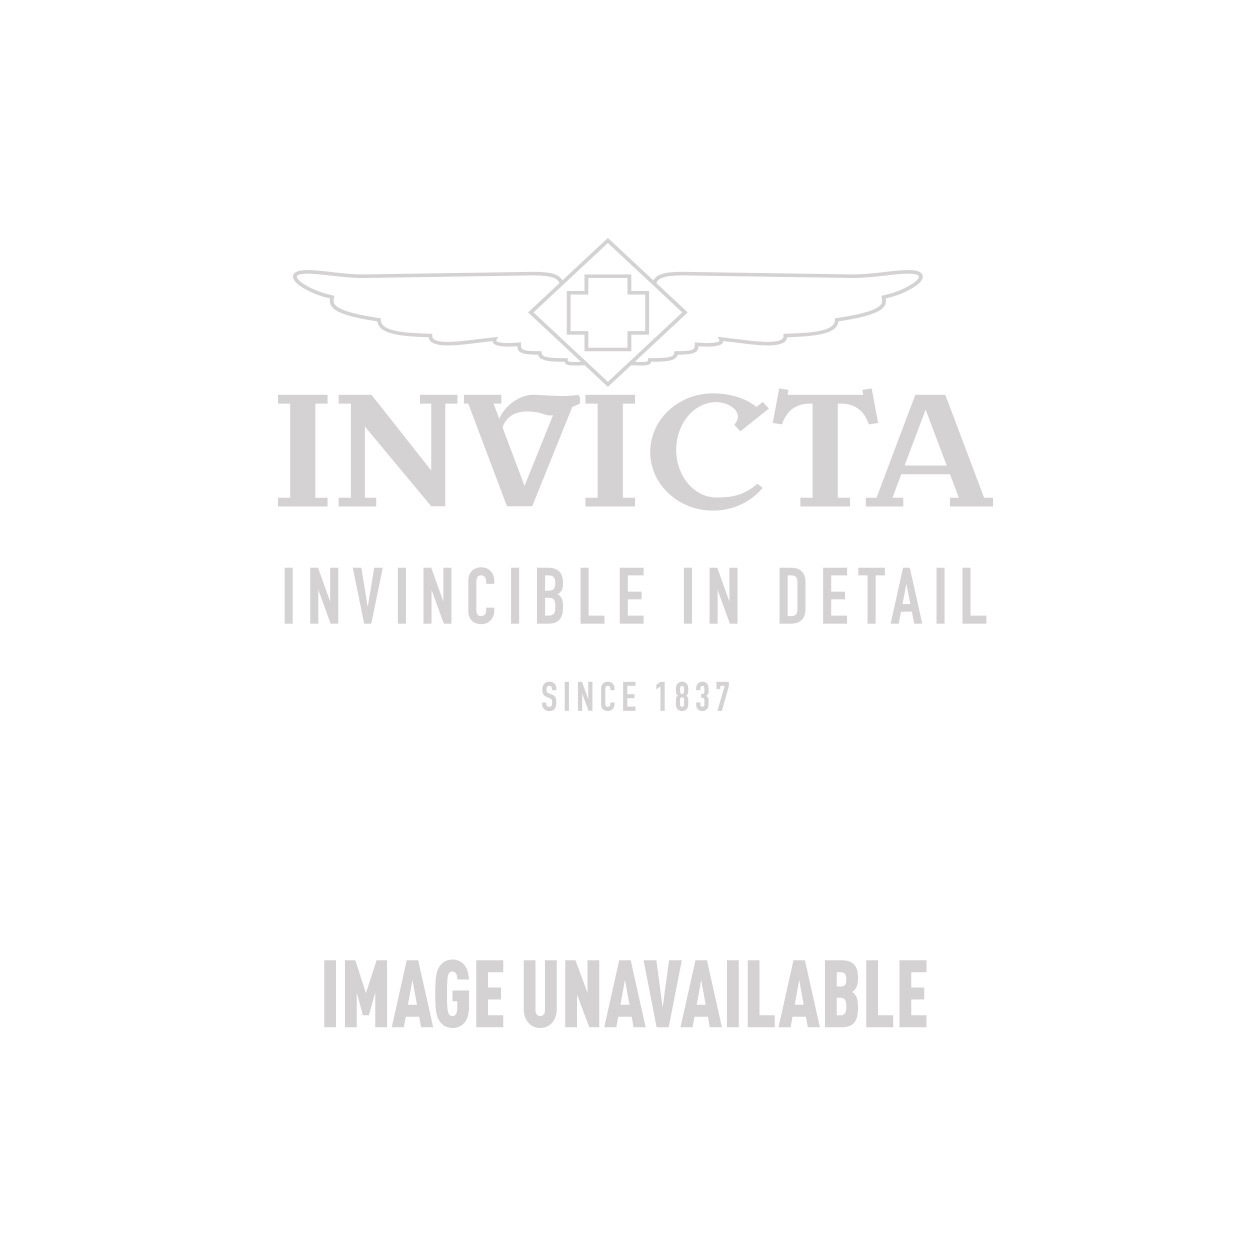 Invicta Speedway Quartz Watch - Stainless Steel case Stainless Steel band - Model 9223